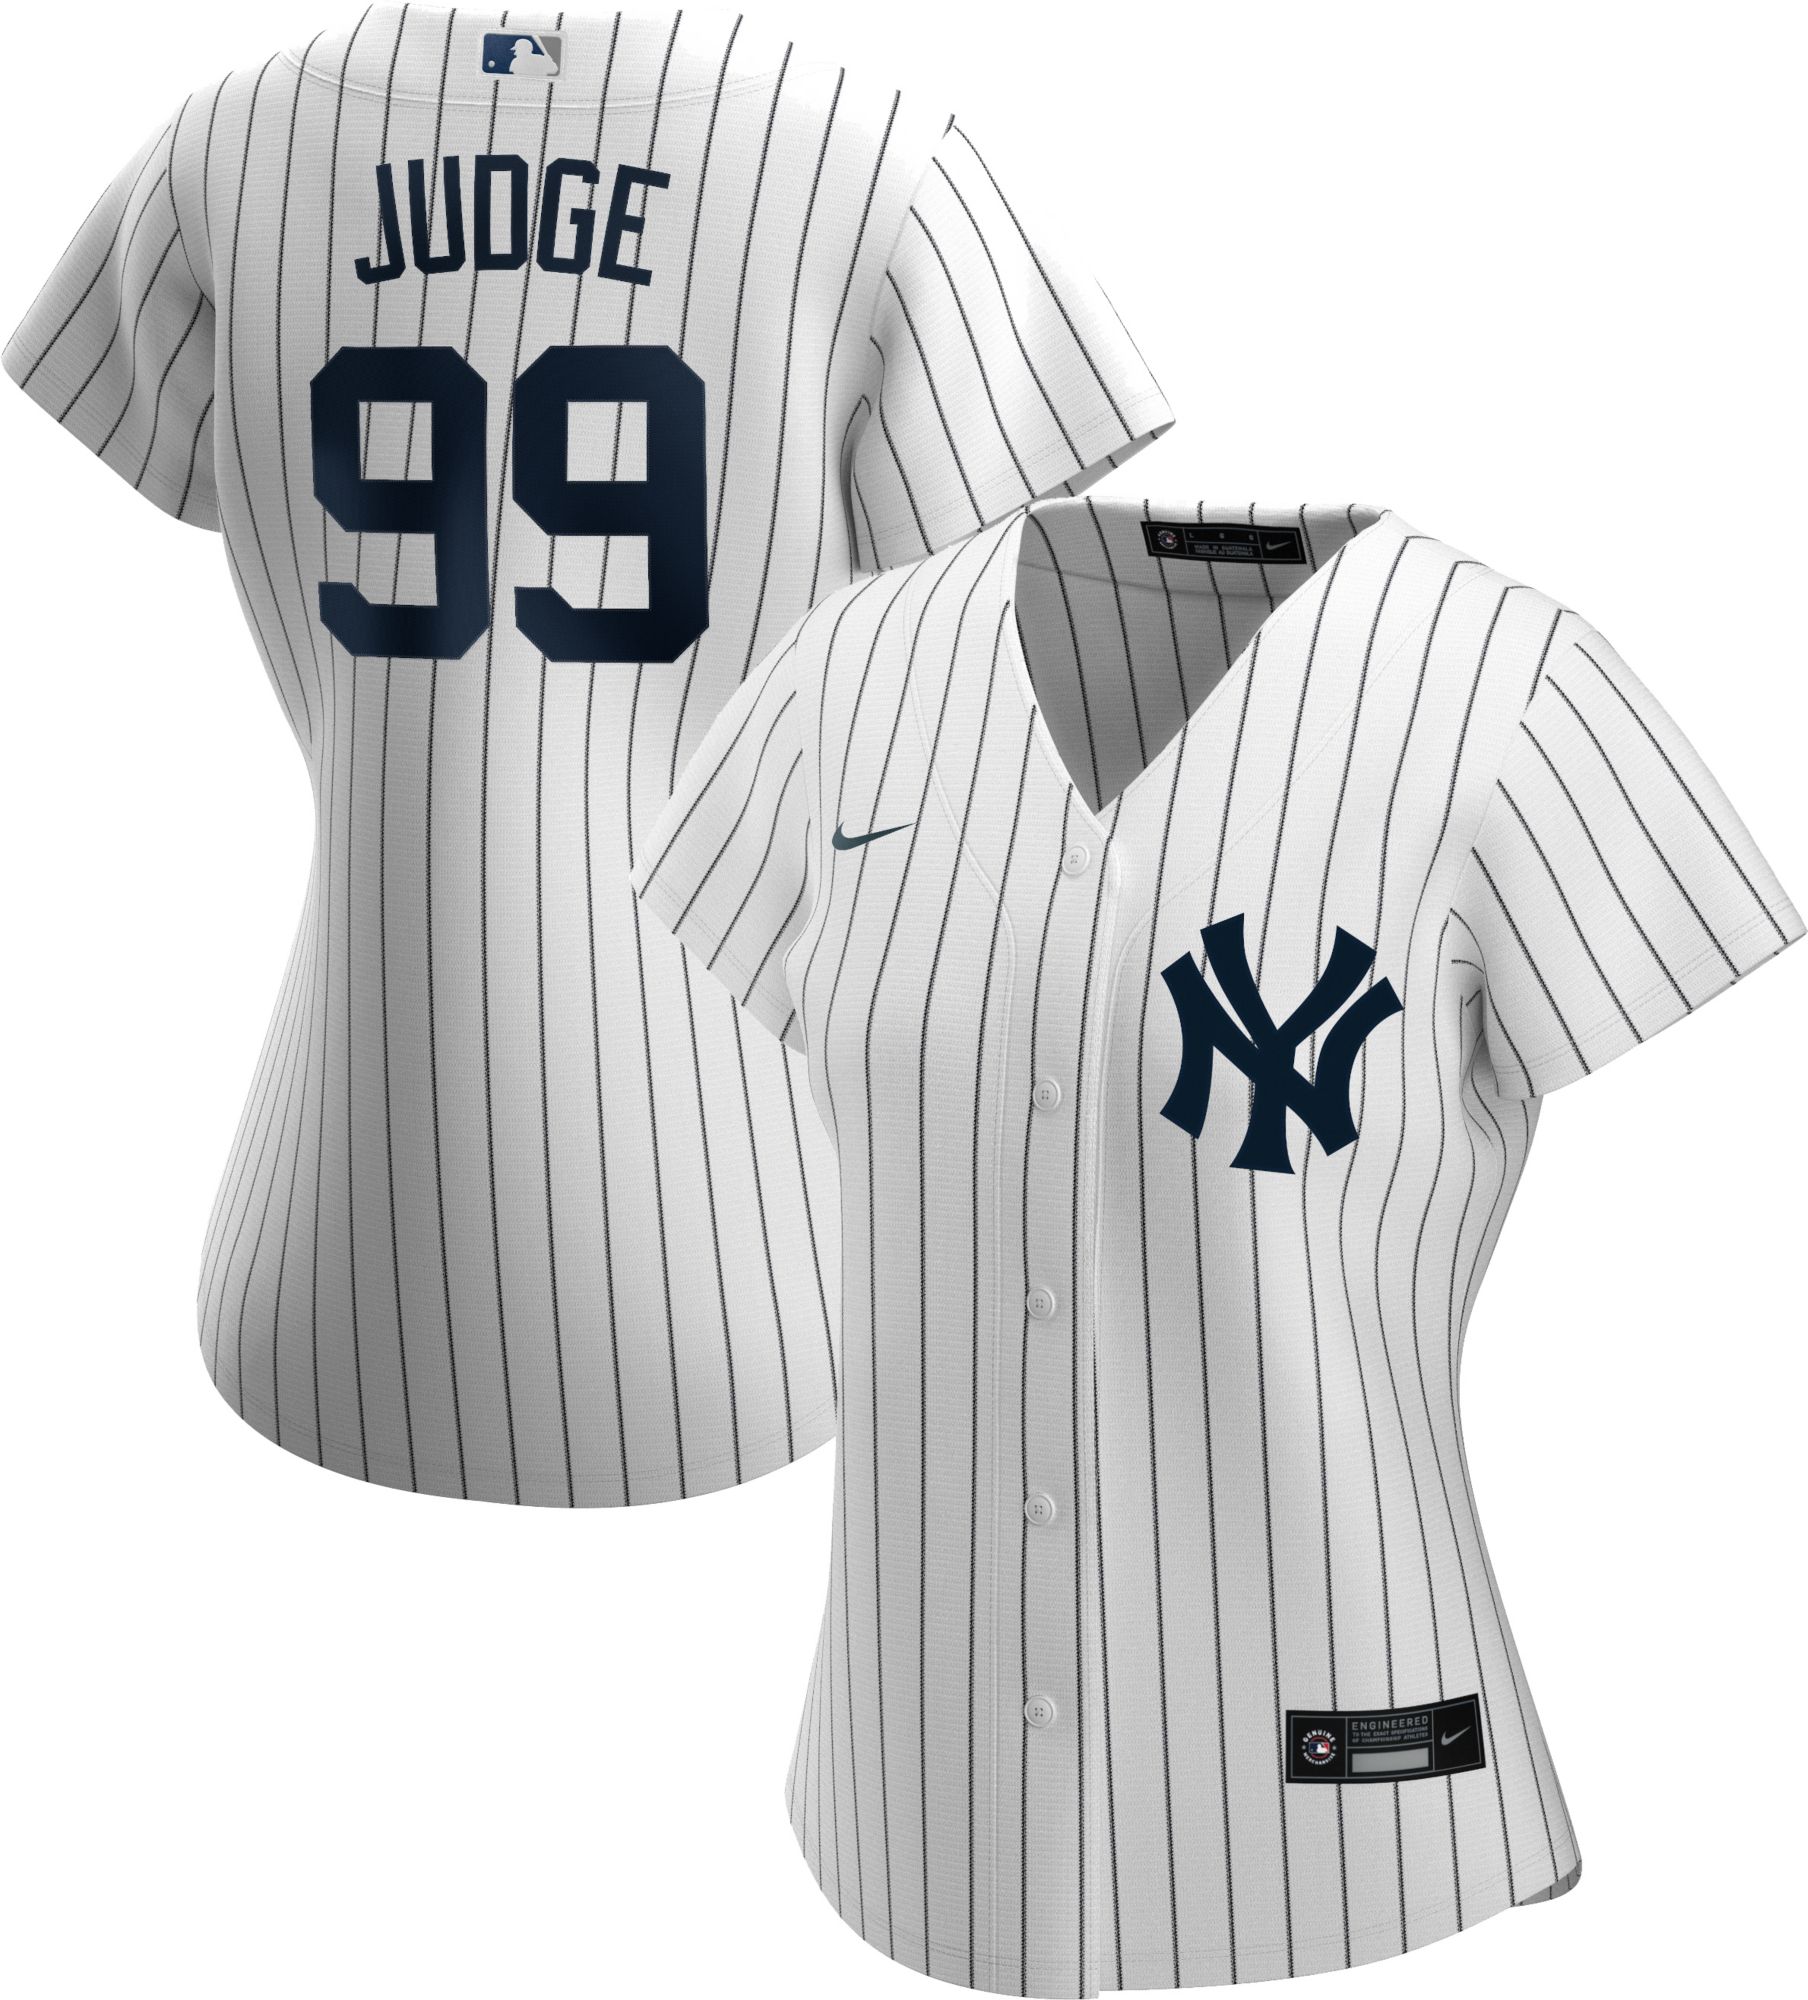 judge 99 jersey